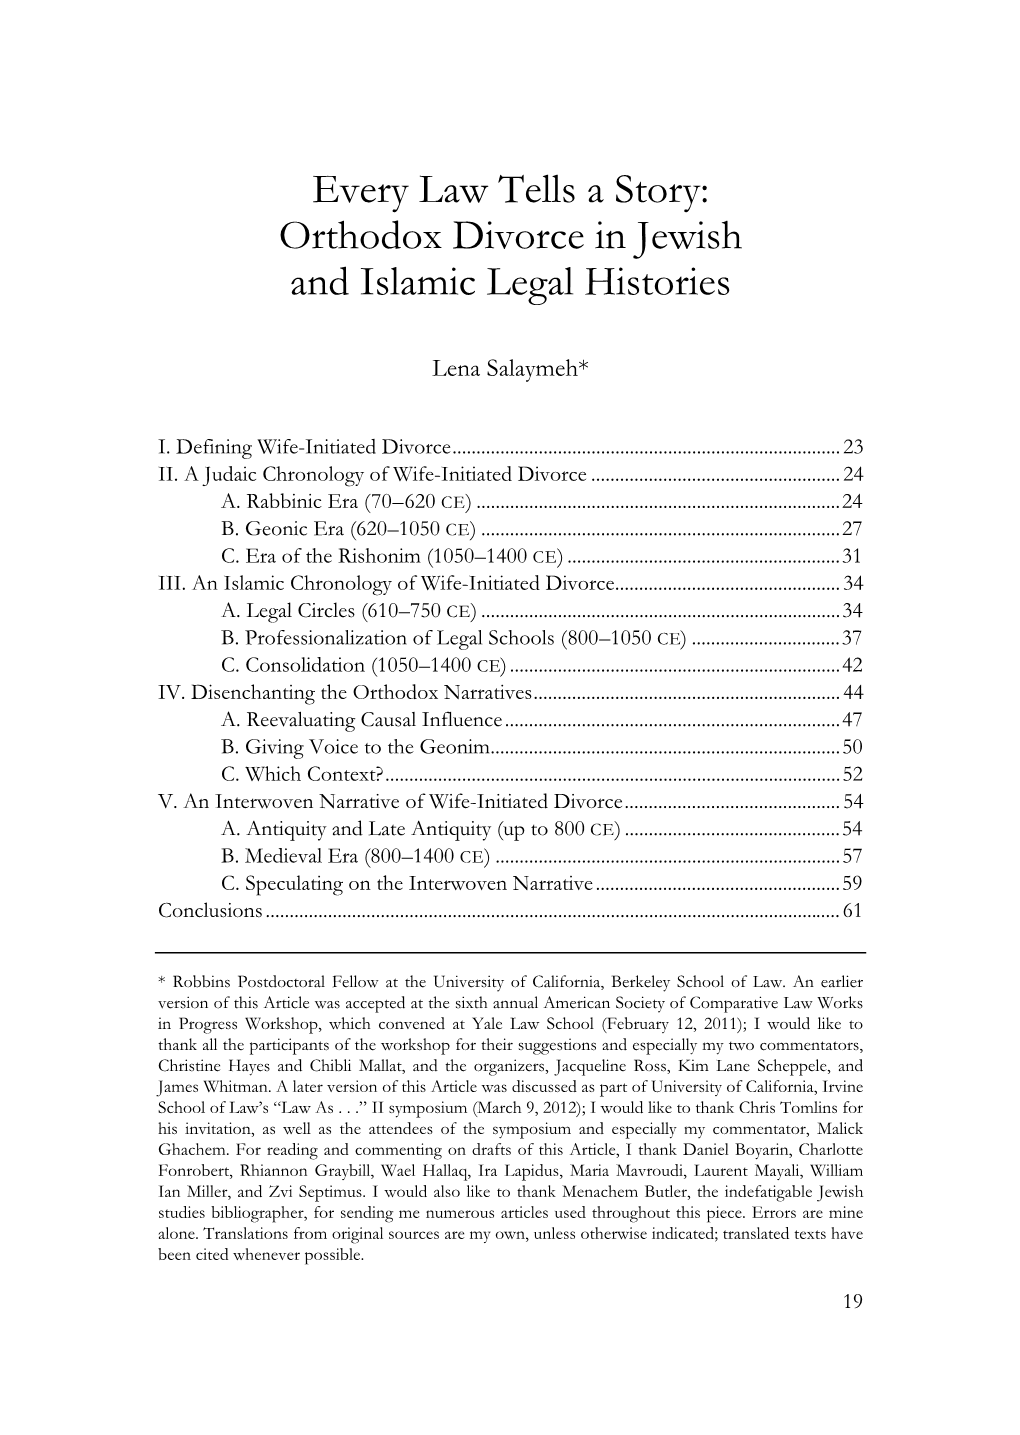 Orthodox Divorce in Jewish and Islamic Legal Histories